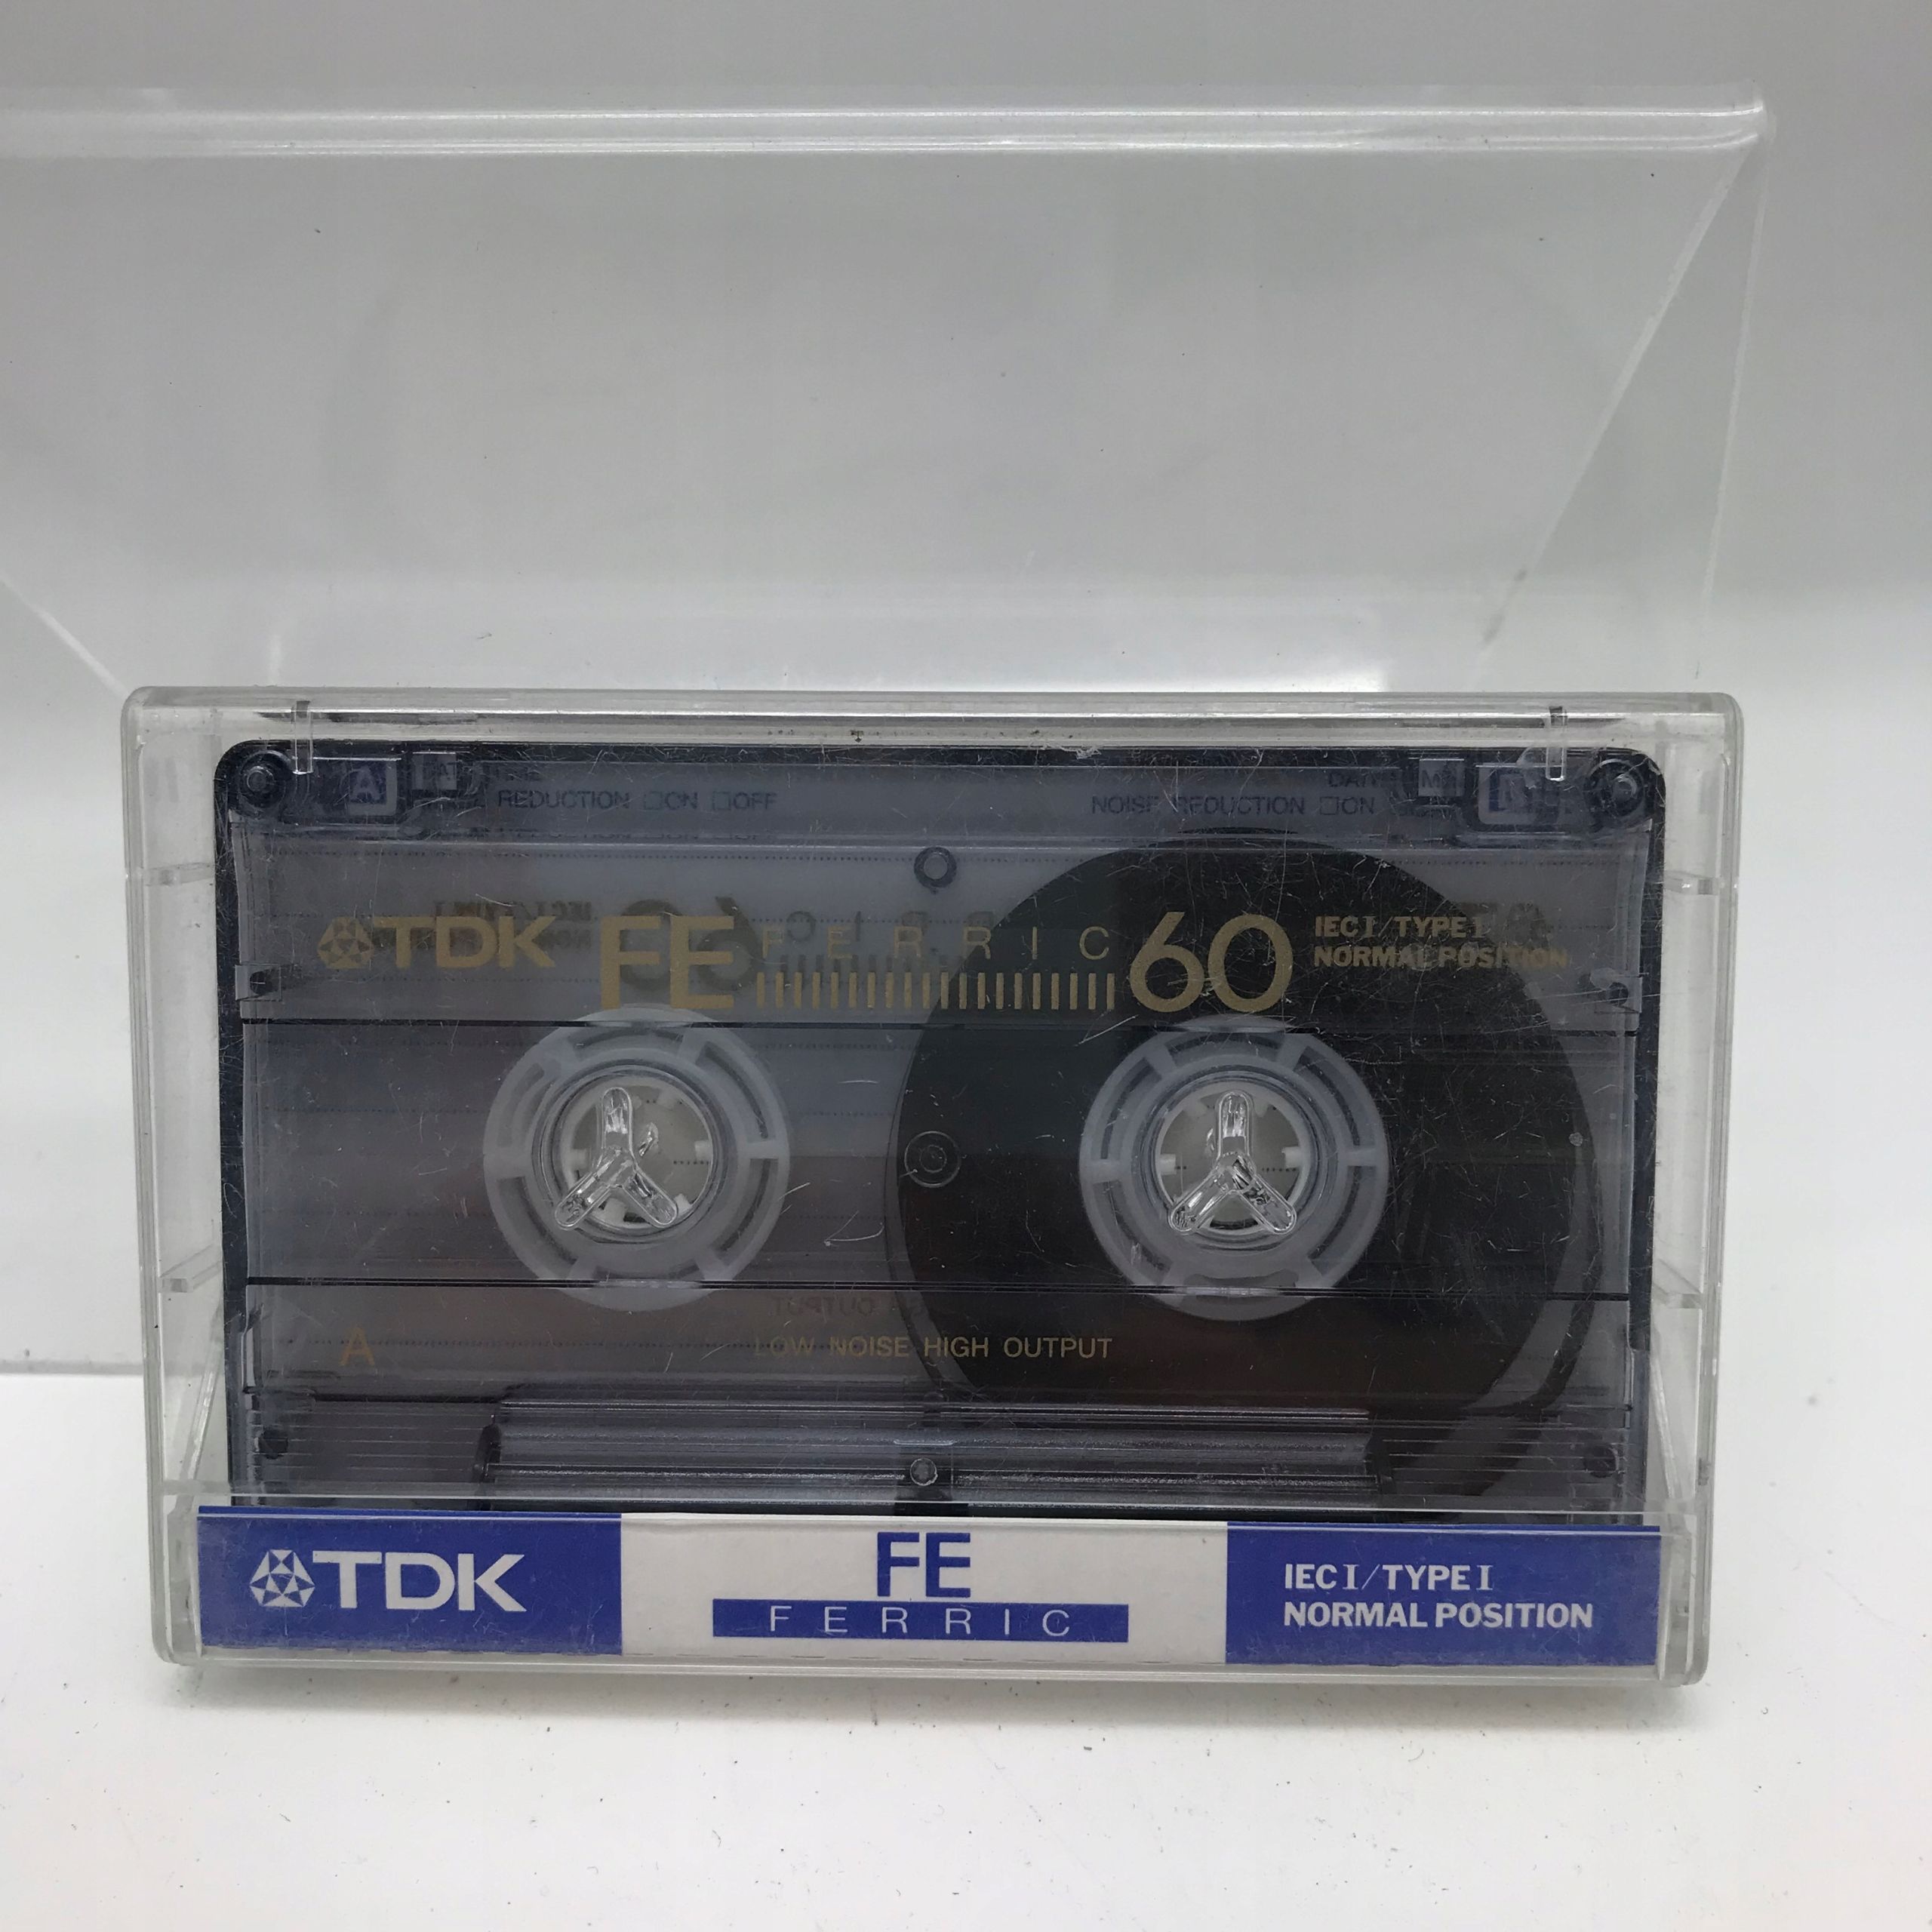 Kaseta - Kaseta magnetofonowa Tdk Fe Ferric 60